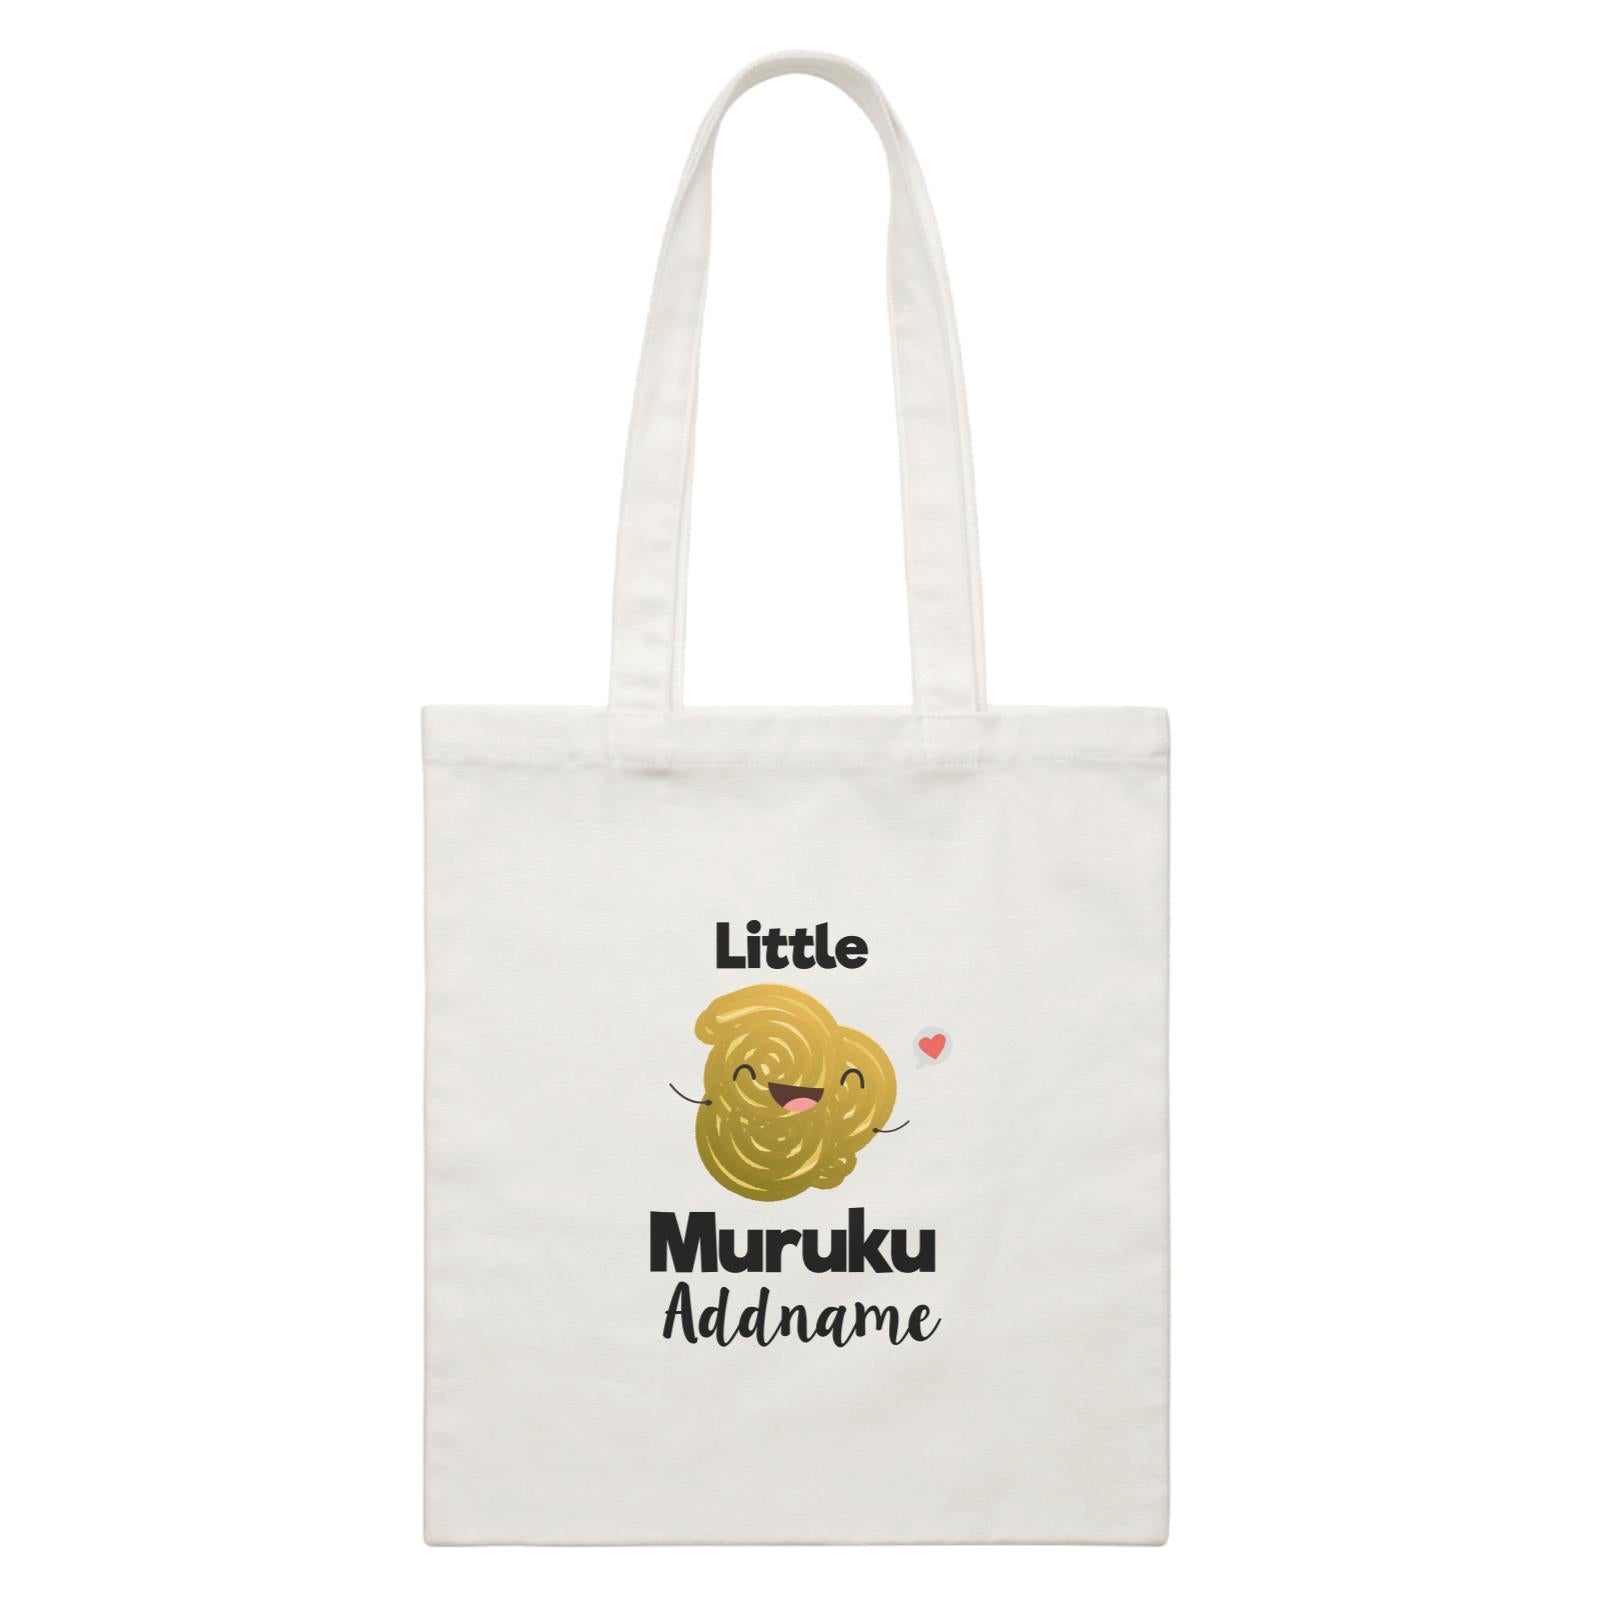 Little Muruku Addname White Canvas Bag